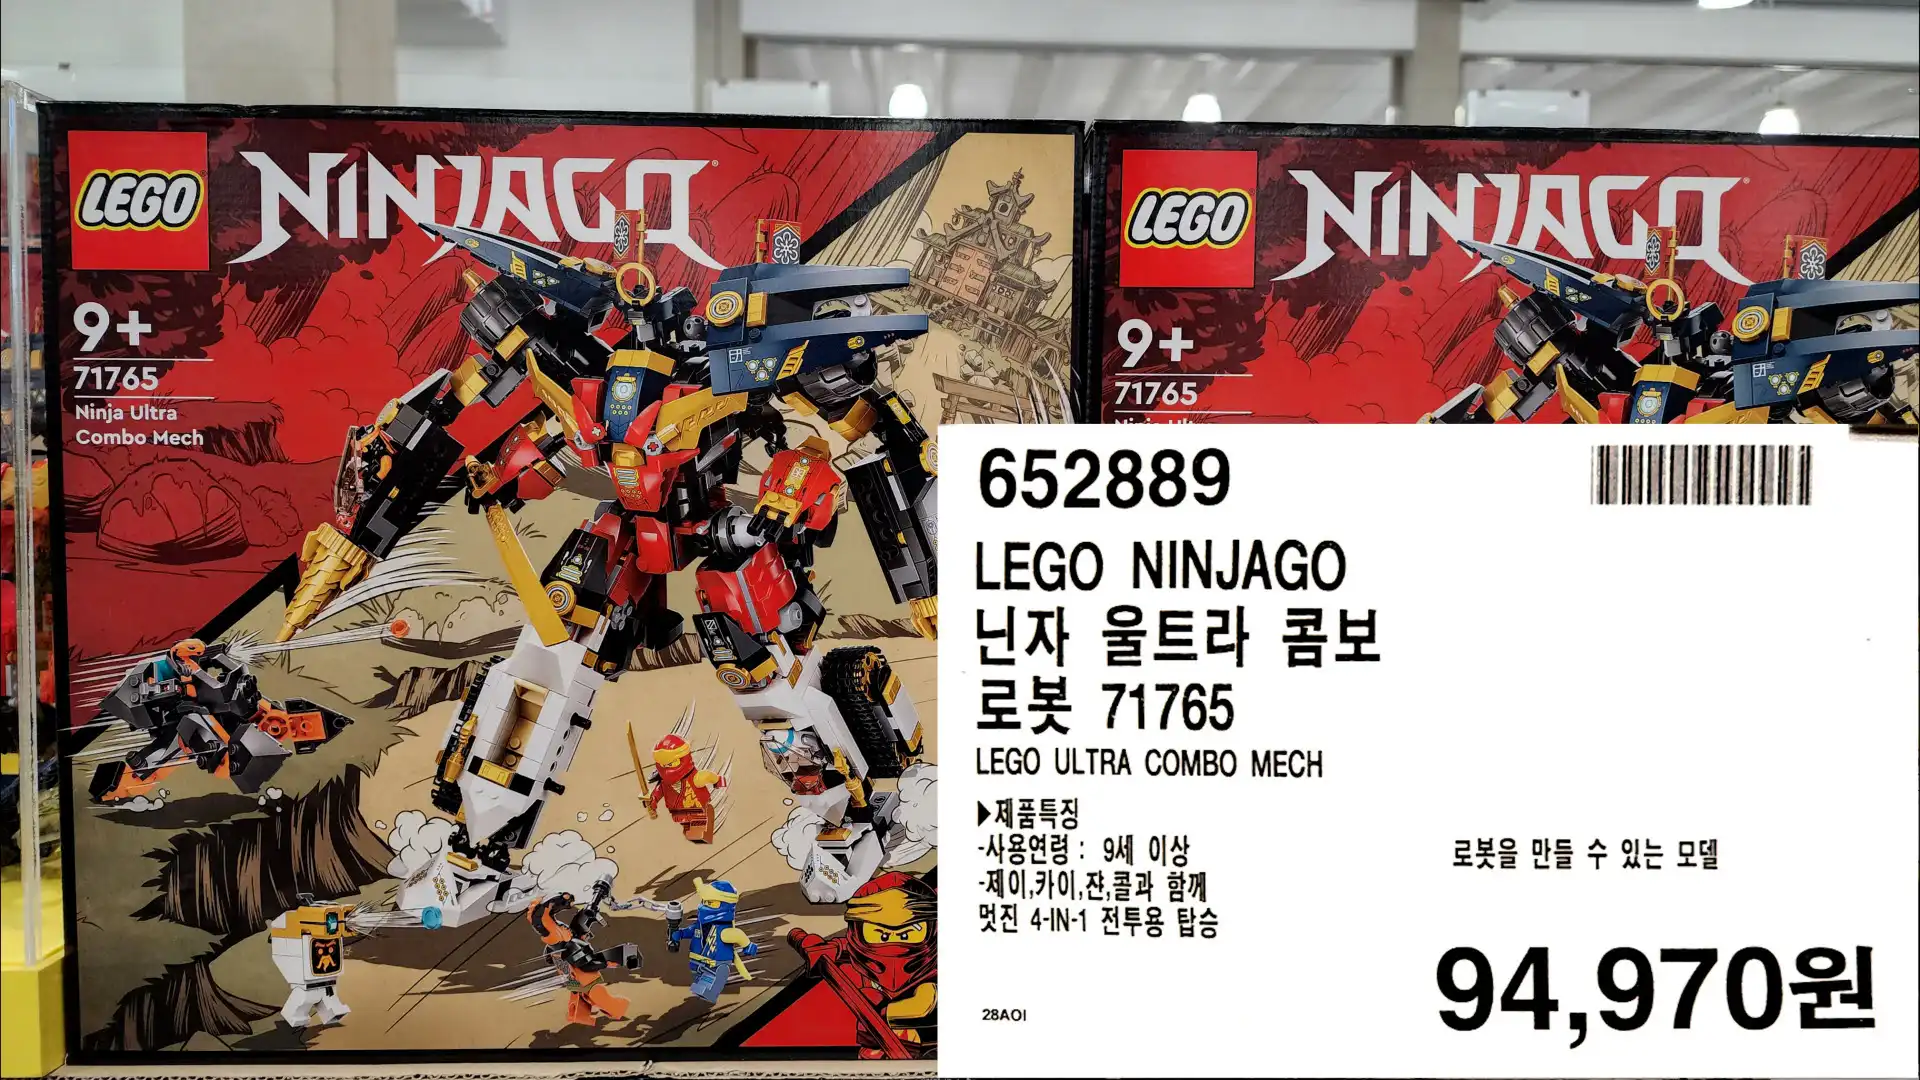 LEGO NINJAGO
닌자 울트라 콤보
로봇 71765
LEGO ULTRA COMBO MECH
▶제품특징
-사용연령: 9세 이상
-제이&#44;카이&#44;쟌&#44;콜과 함께
멋진 4-IN-1 전투용 탑승
로봇을 만들 수 있는 모델
94&#44;970원